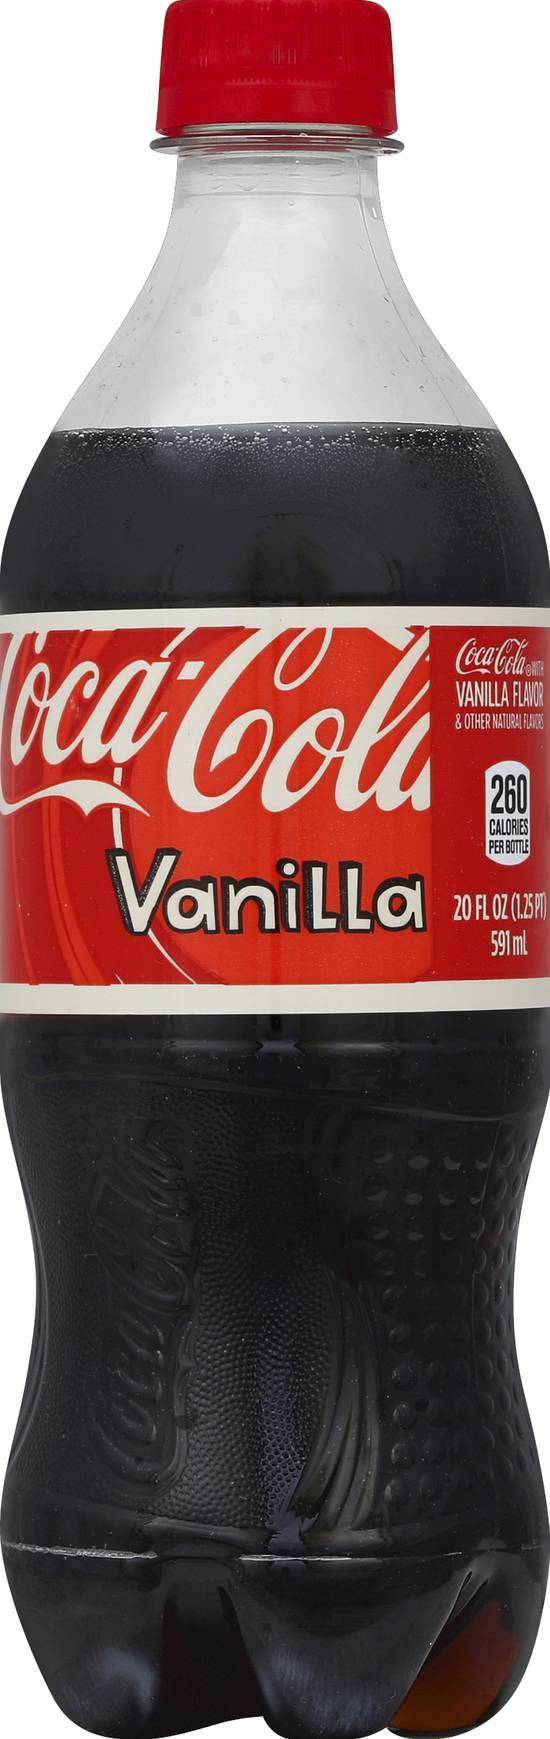 Coca-Cola Soda (20 fl oz) (vanilla)